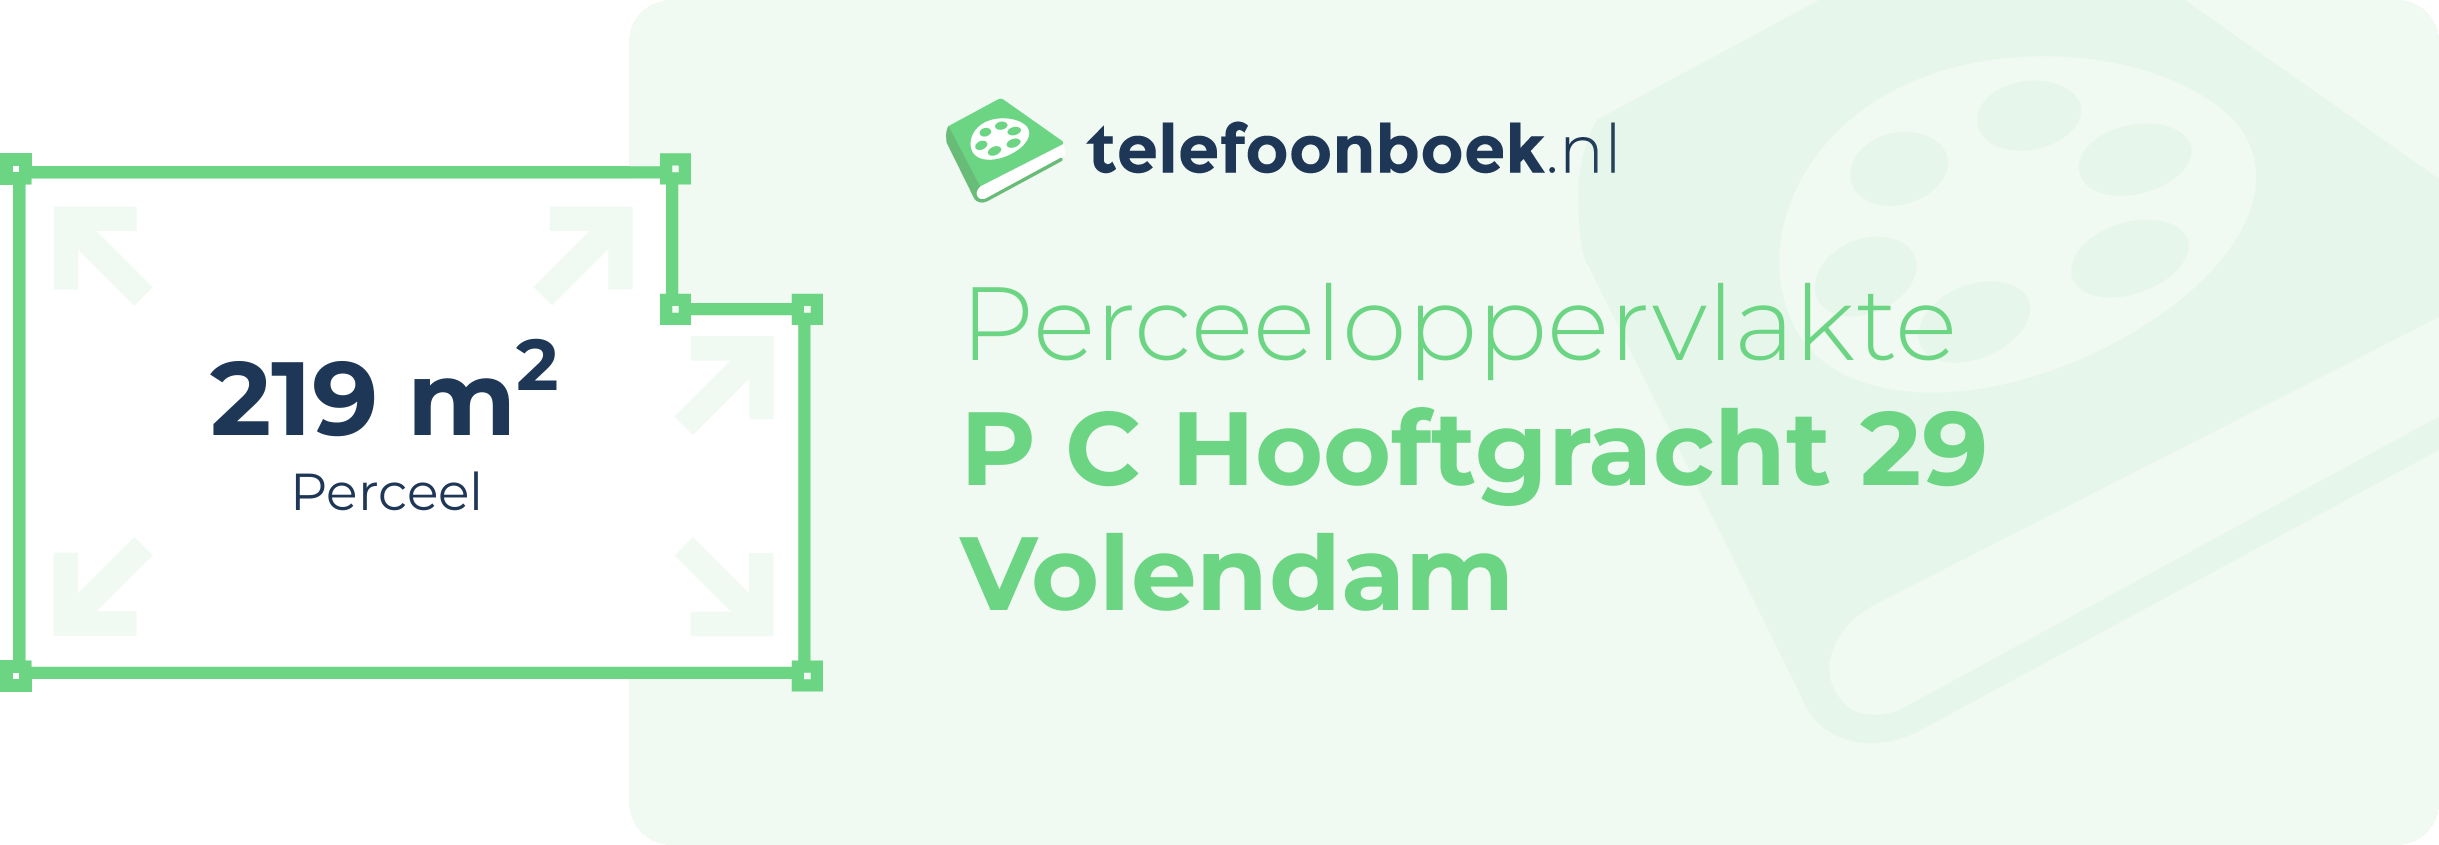 Perceeloppervlakte P C Hooftgracht 29 Volendam